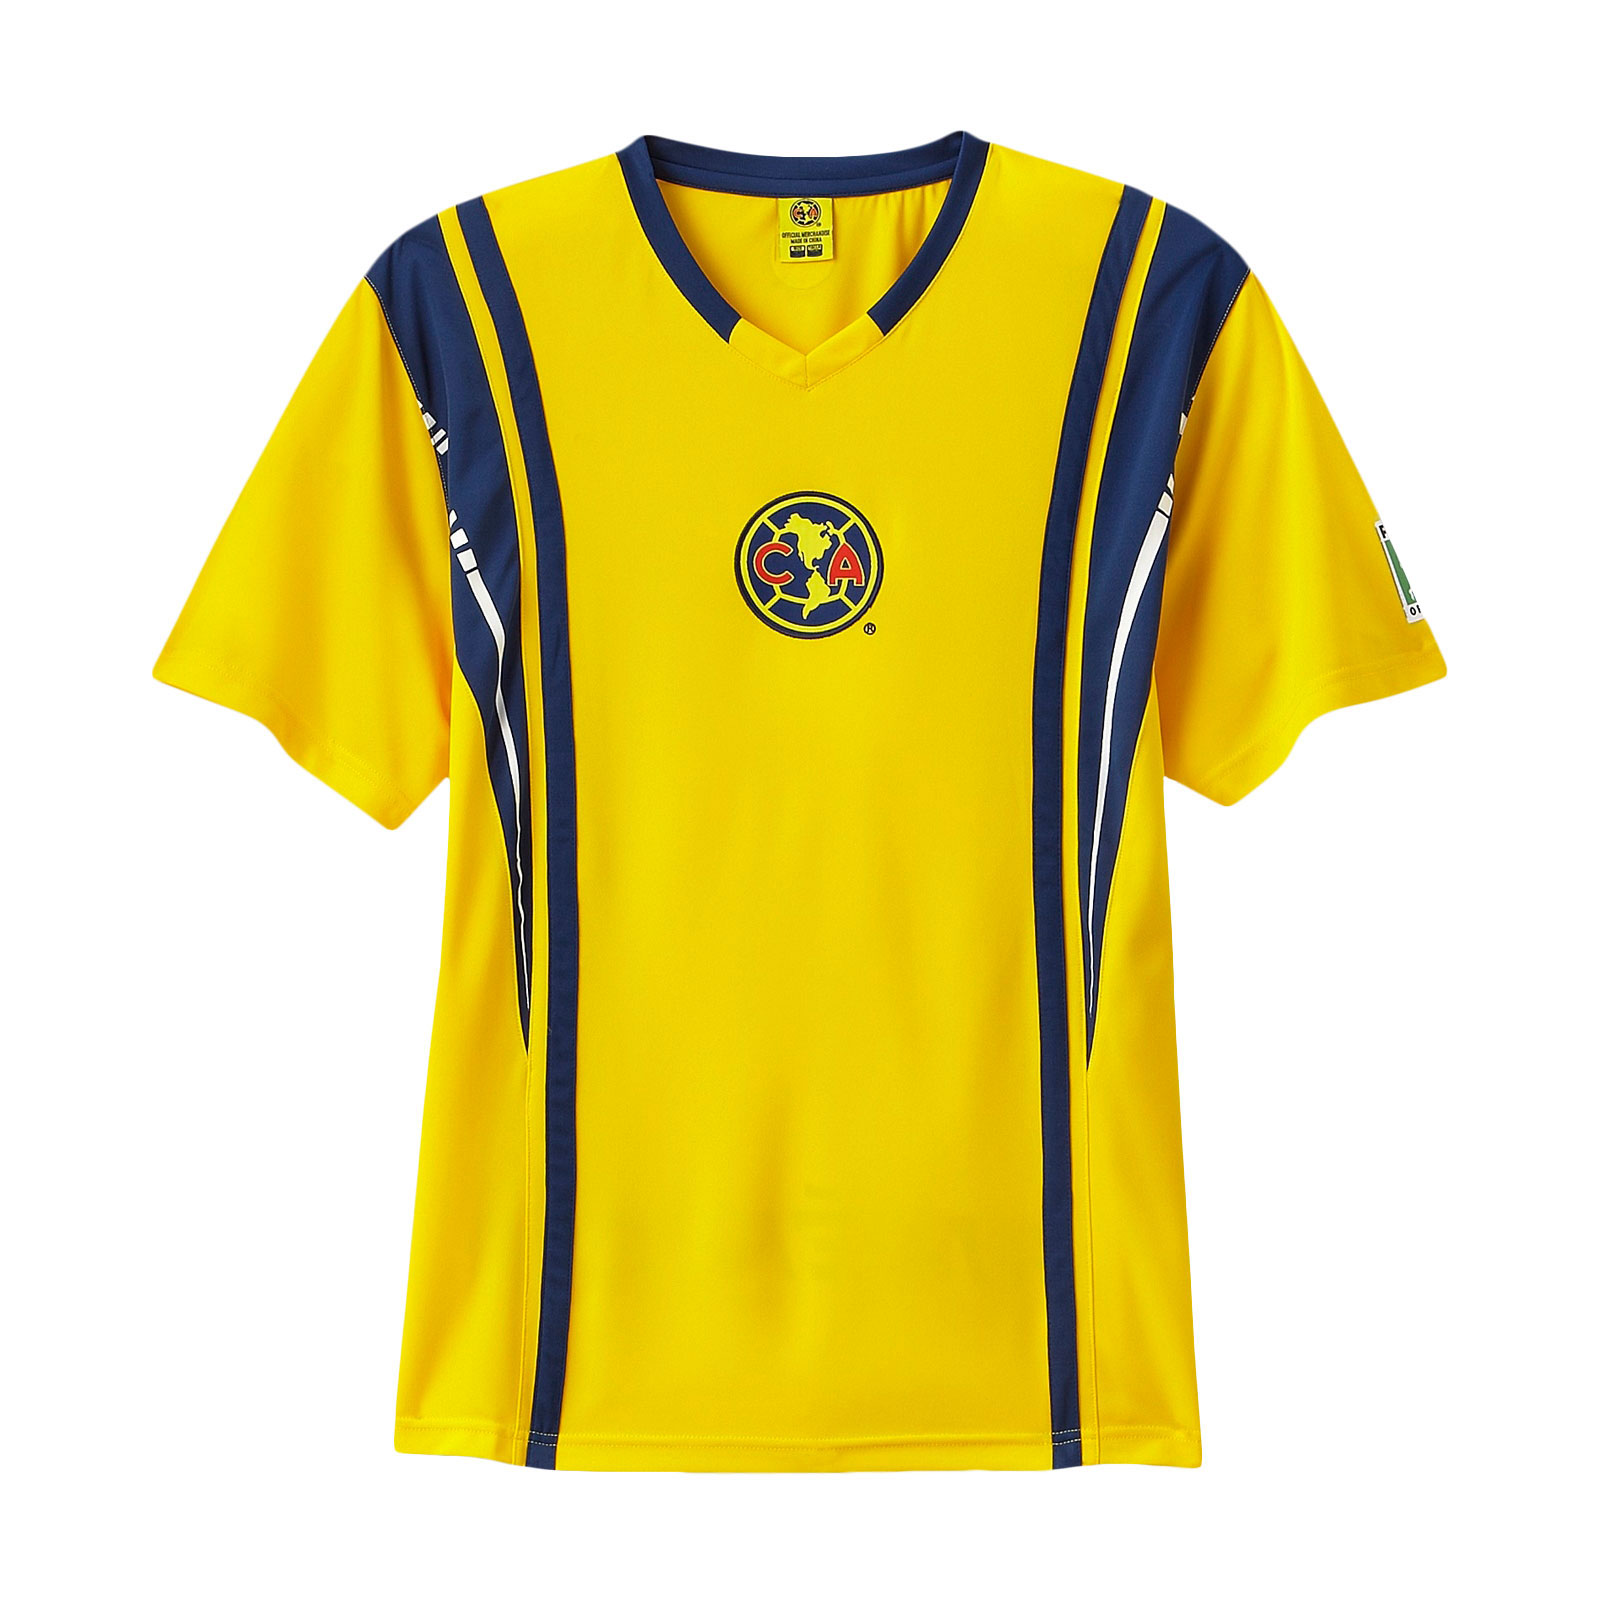 EURO SOCCER Men's Club America Soccer Shirt